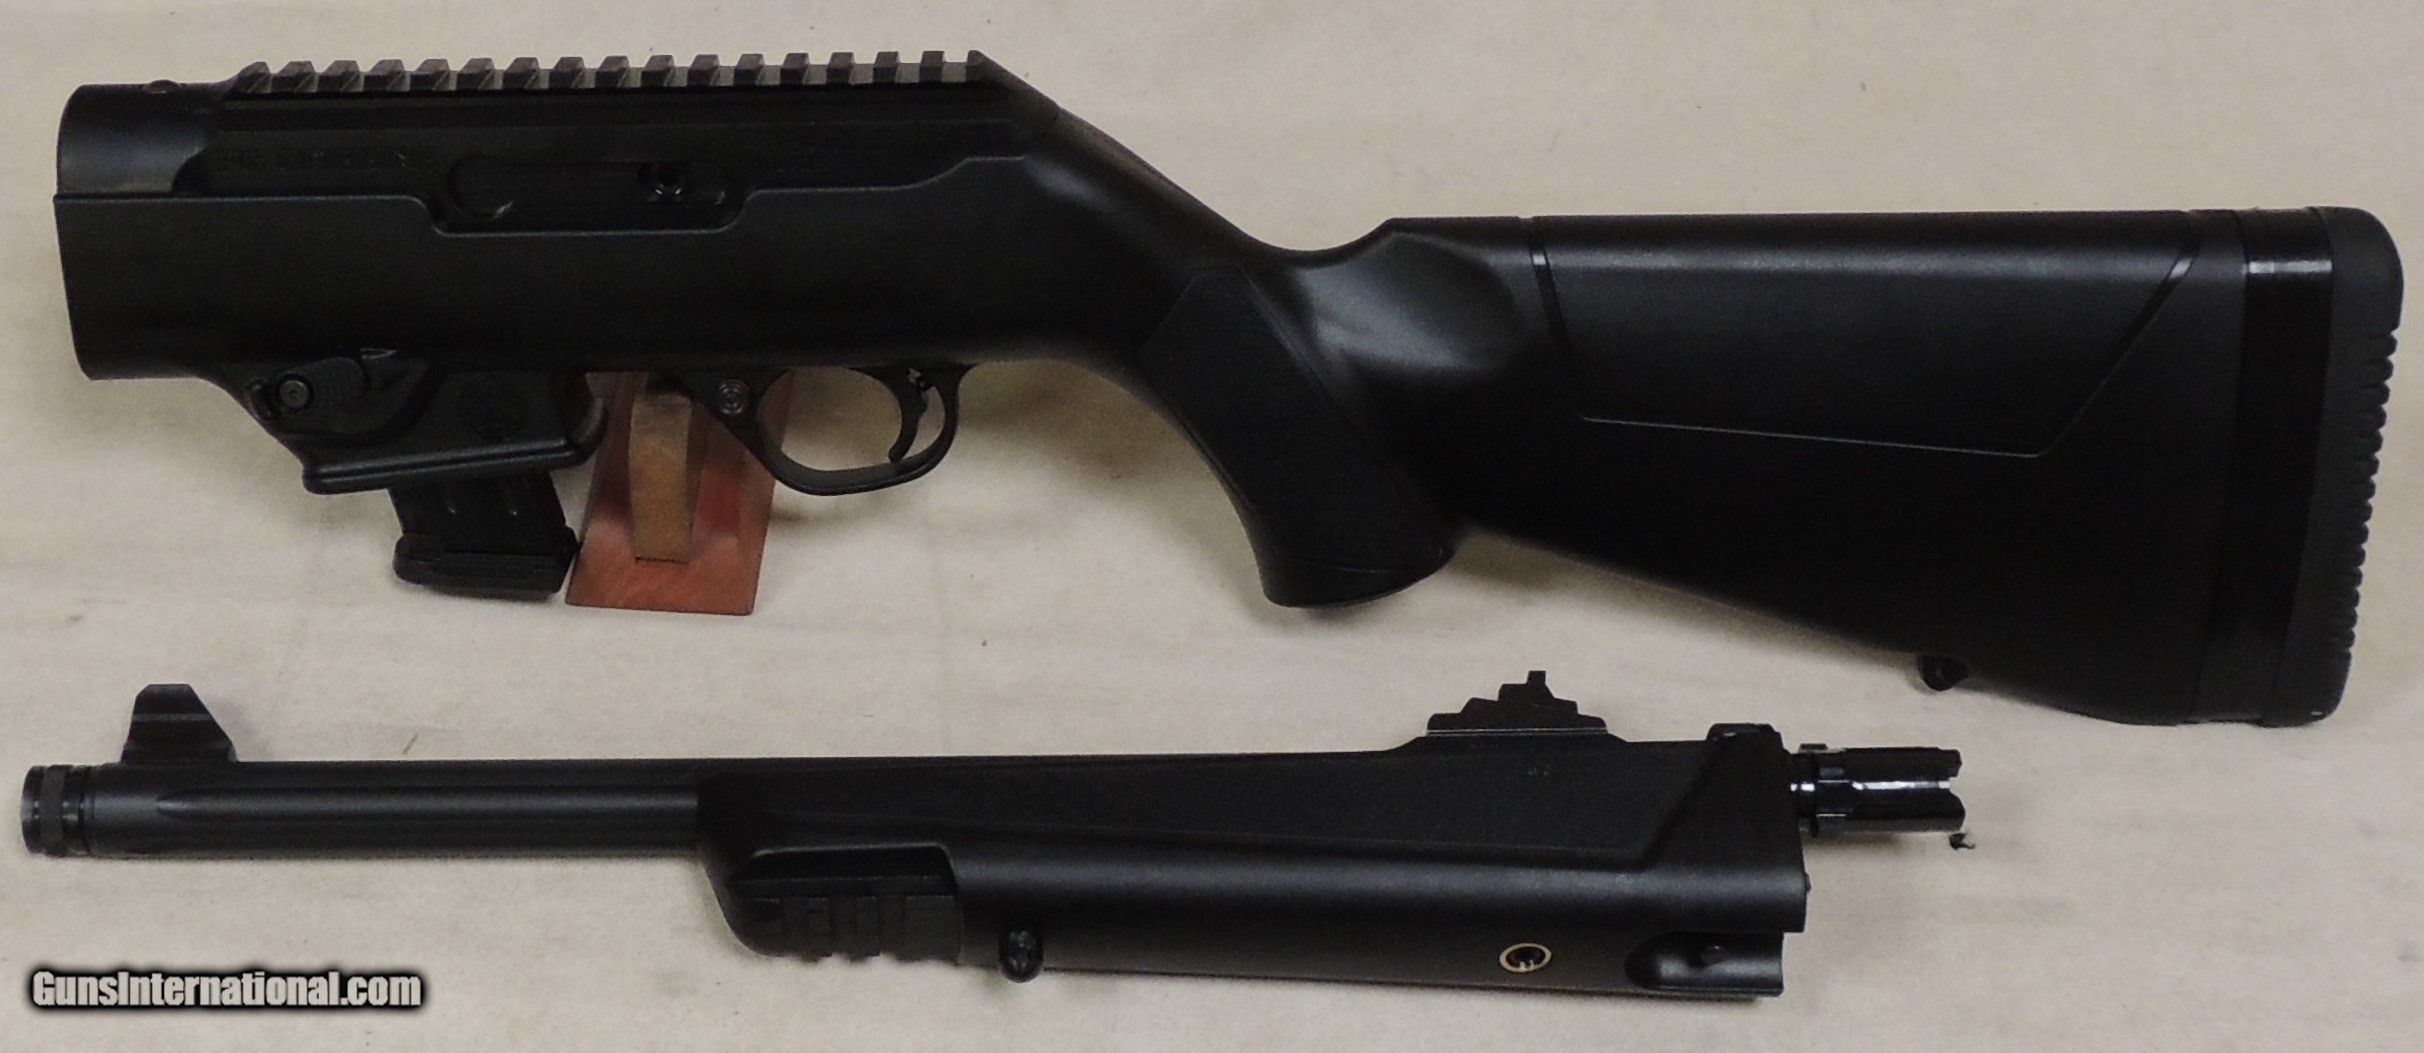 Ruger Pc Carbine 9mm Caliber Takedown Rifle Nib Sn 911 88254xx